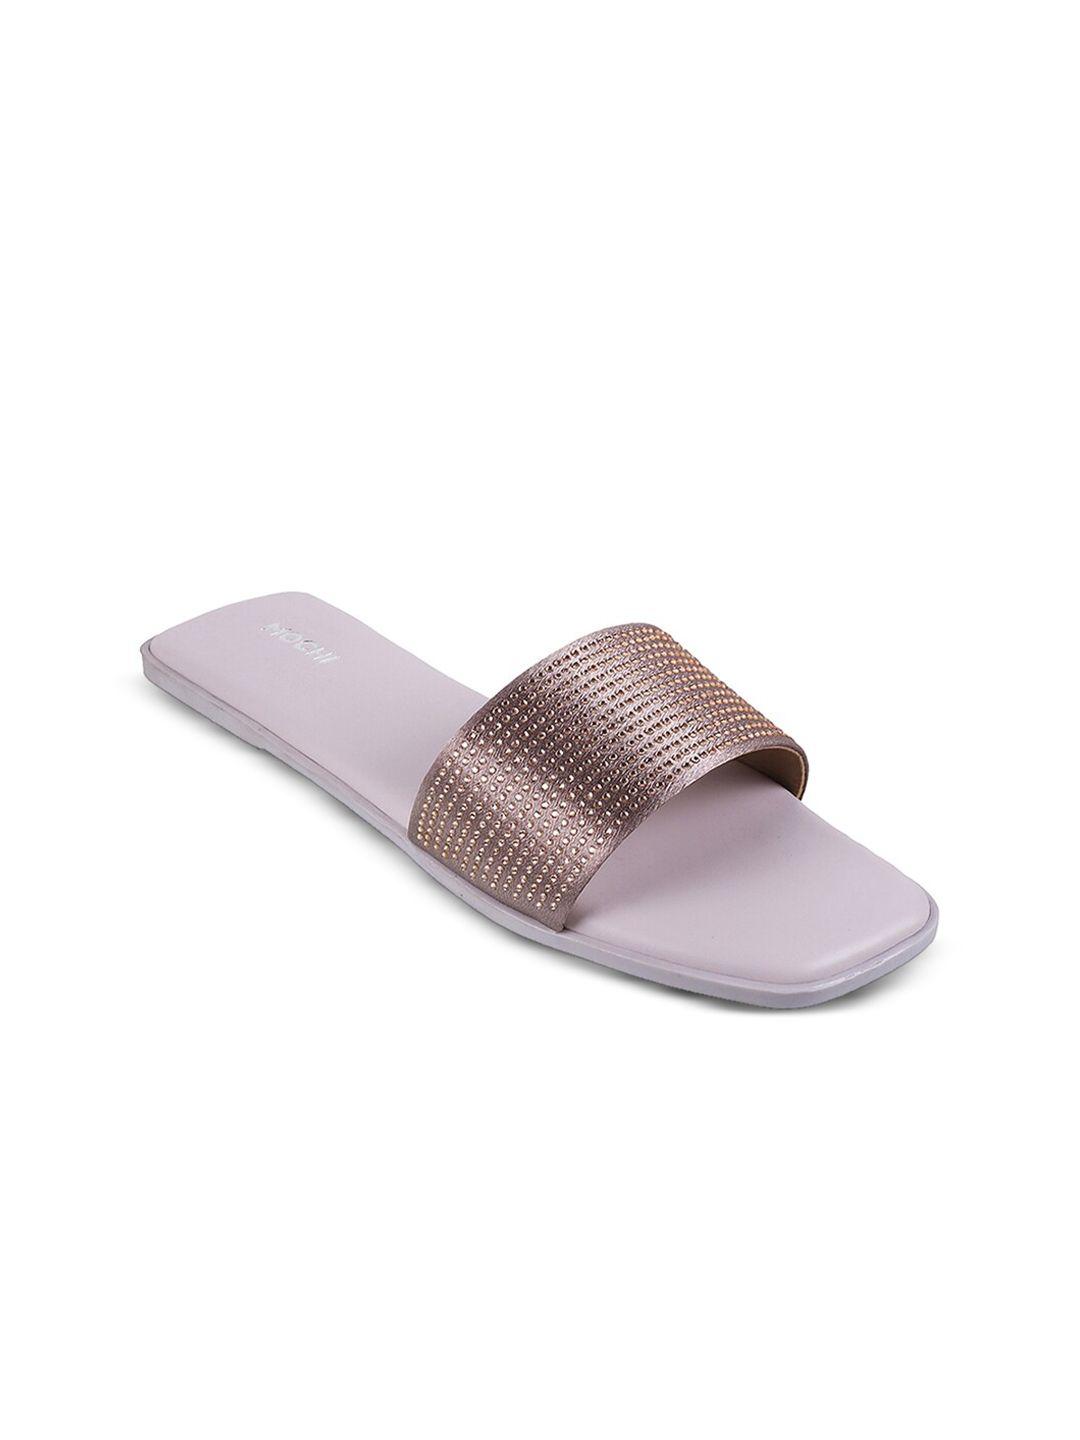 mochi embellished open toe flats